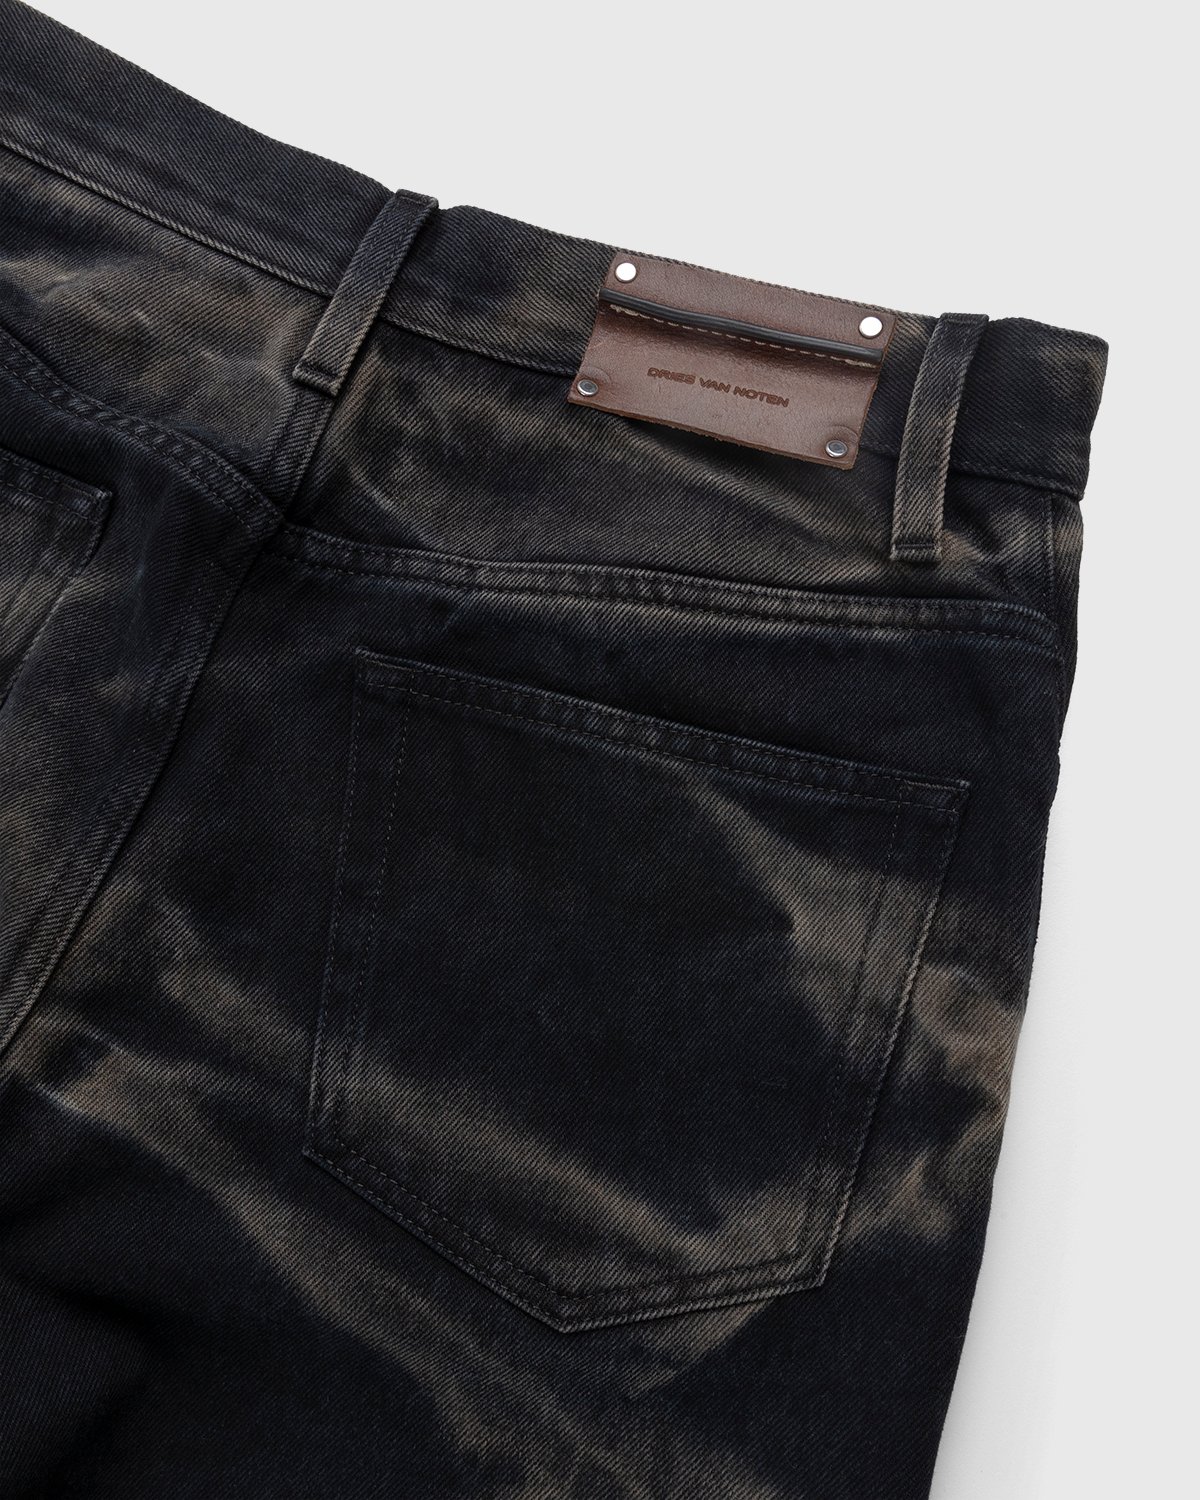 Dries van Noten - Pine Acid Wash Jeans Black - Clothing - Black - Image 3